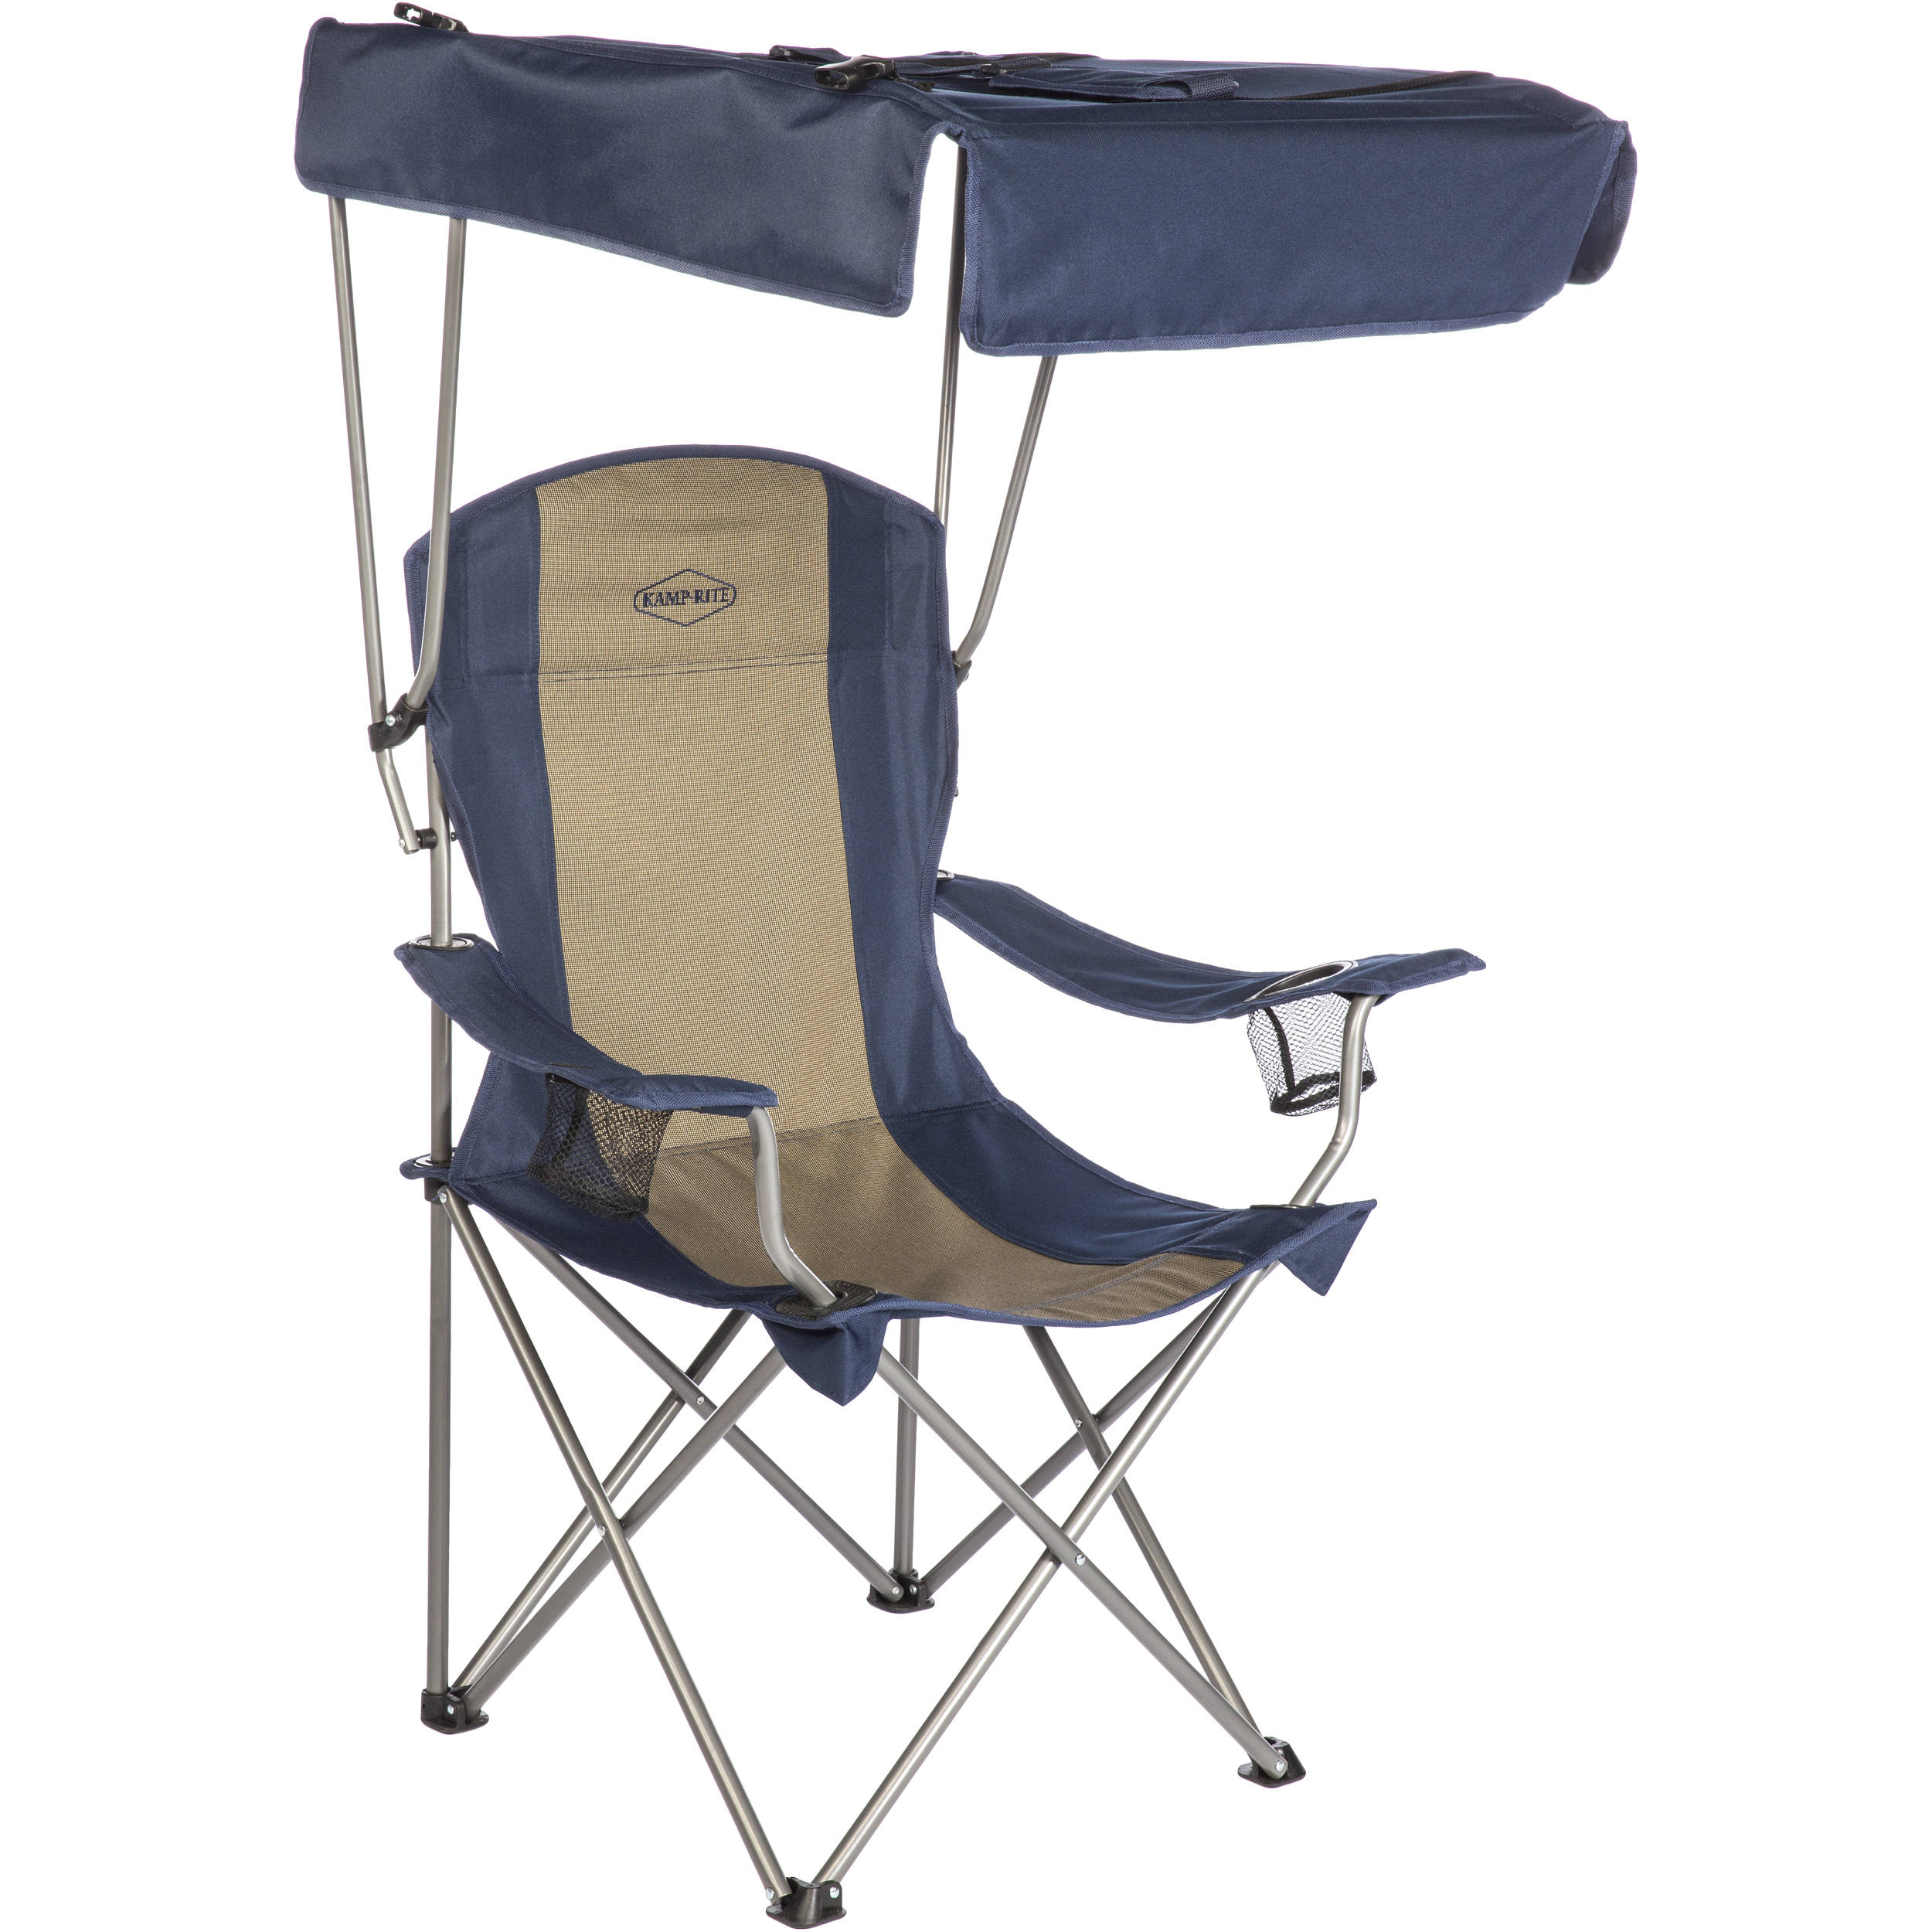 Kamp Rite Folding Chair With Shade Canopy Cc463 B H Photo Video